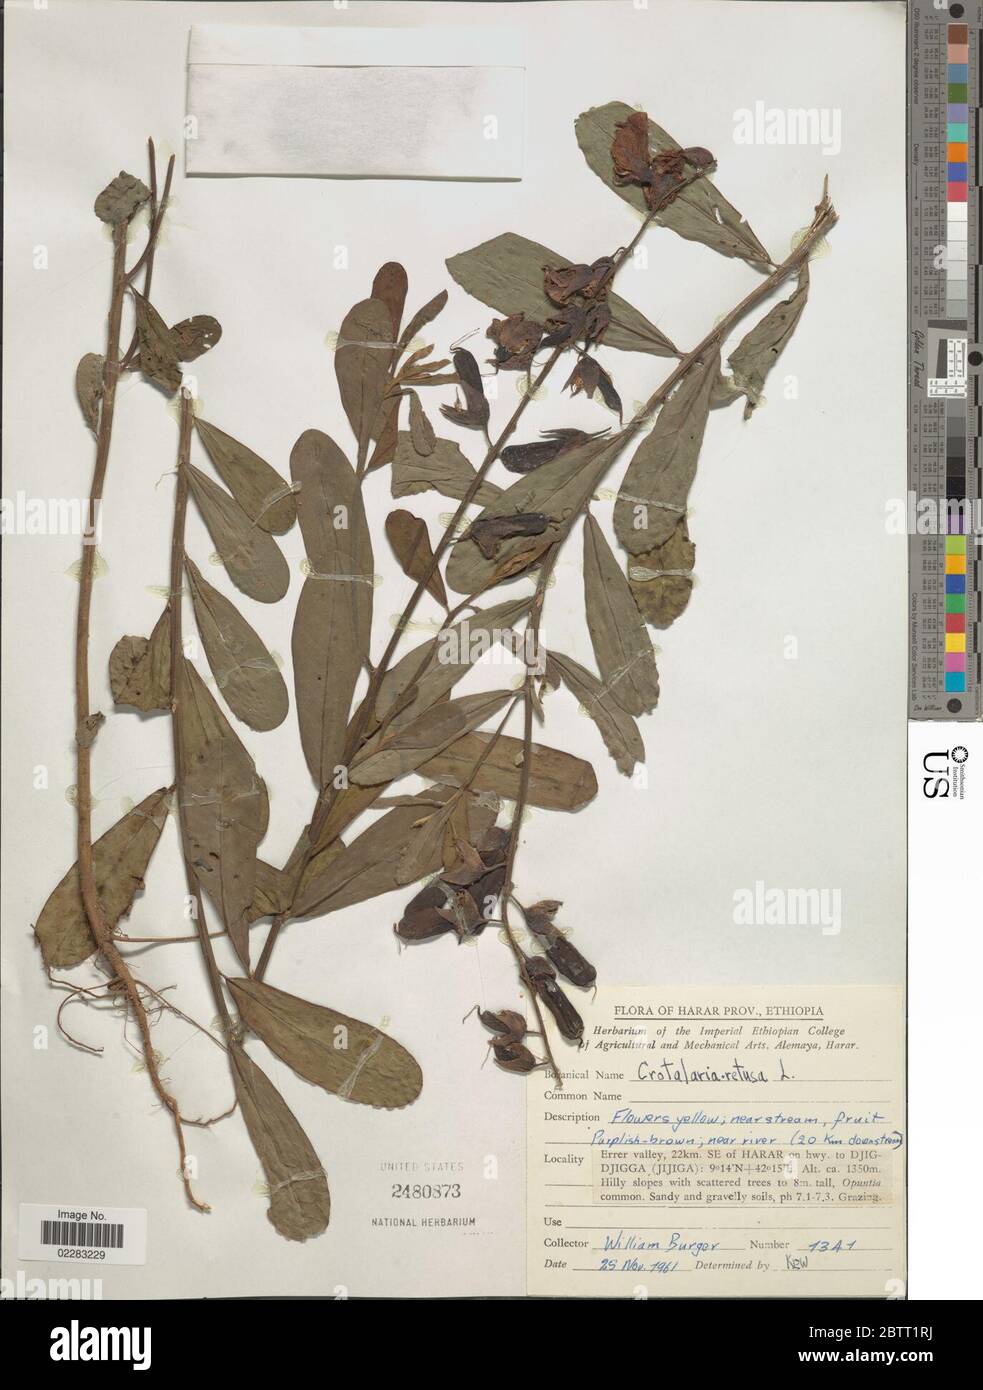 Crotalaria retusa L. Stock Photo